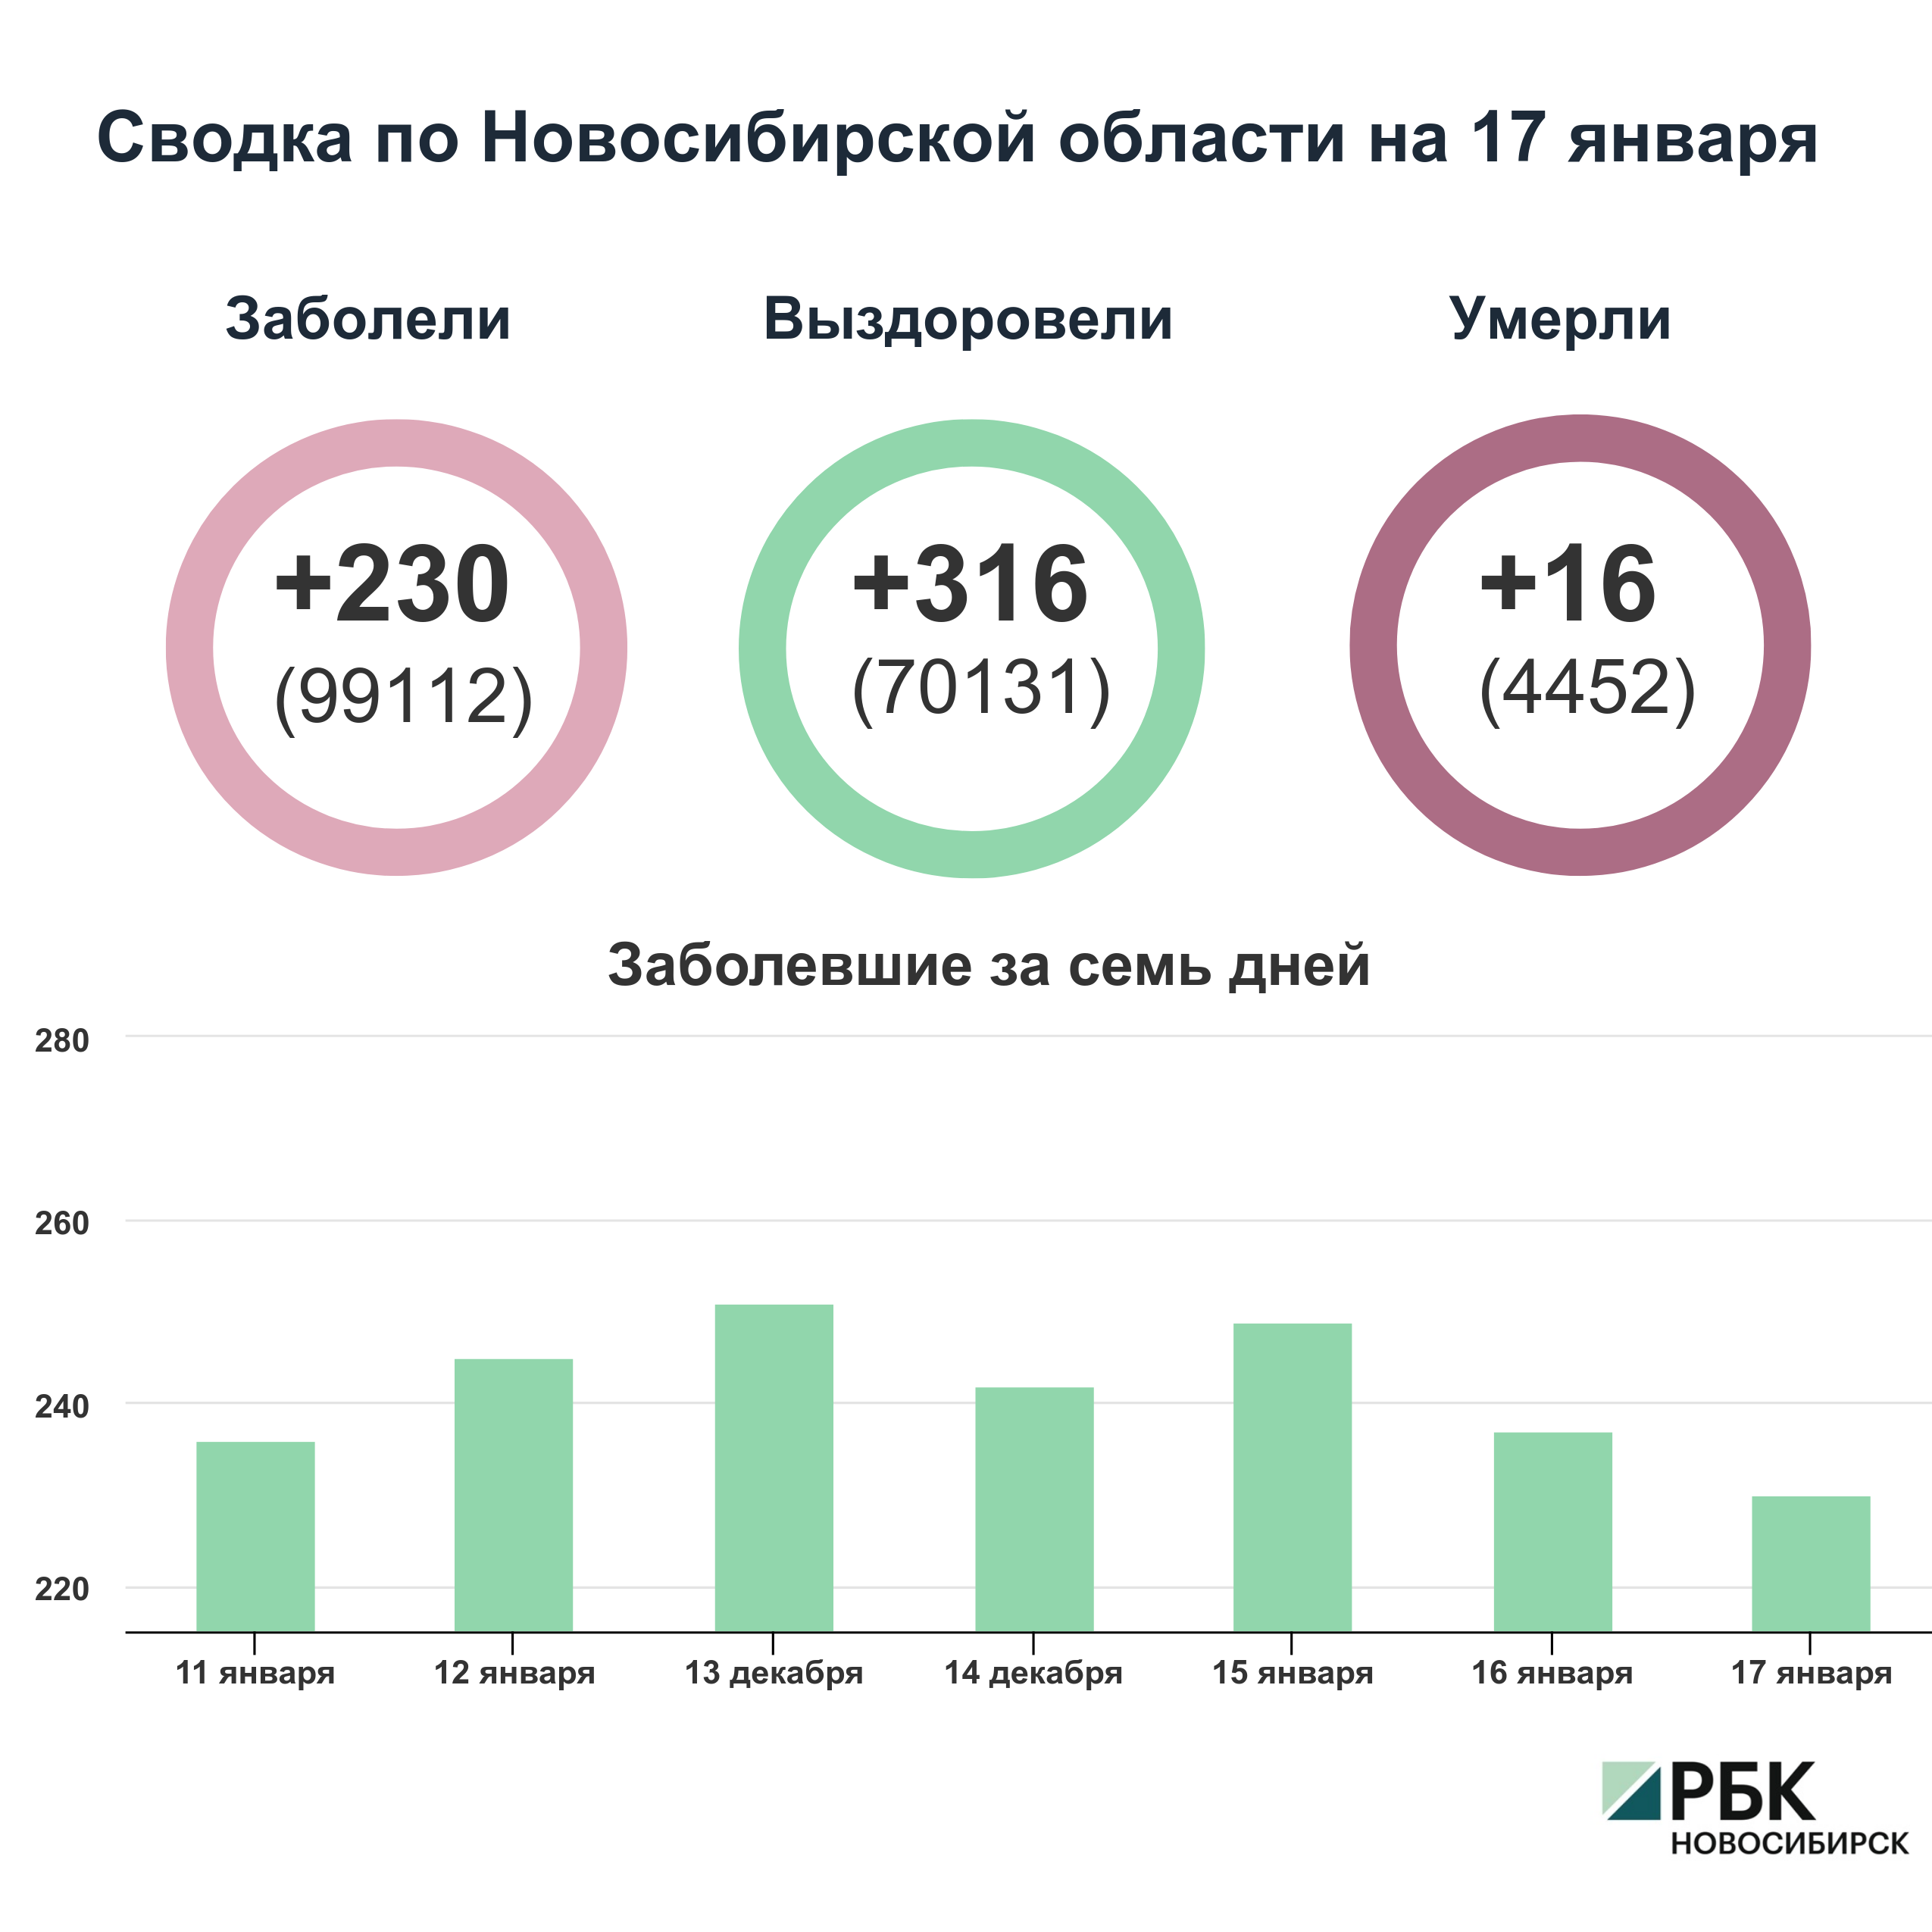 Коронавирус в Новосибирске: сводка на 17 января